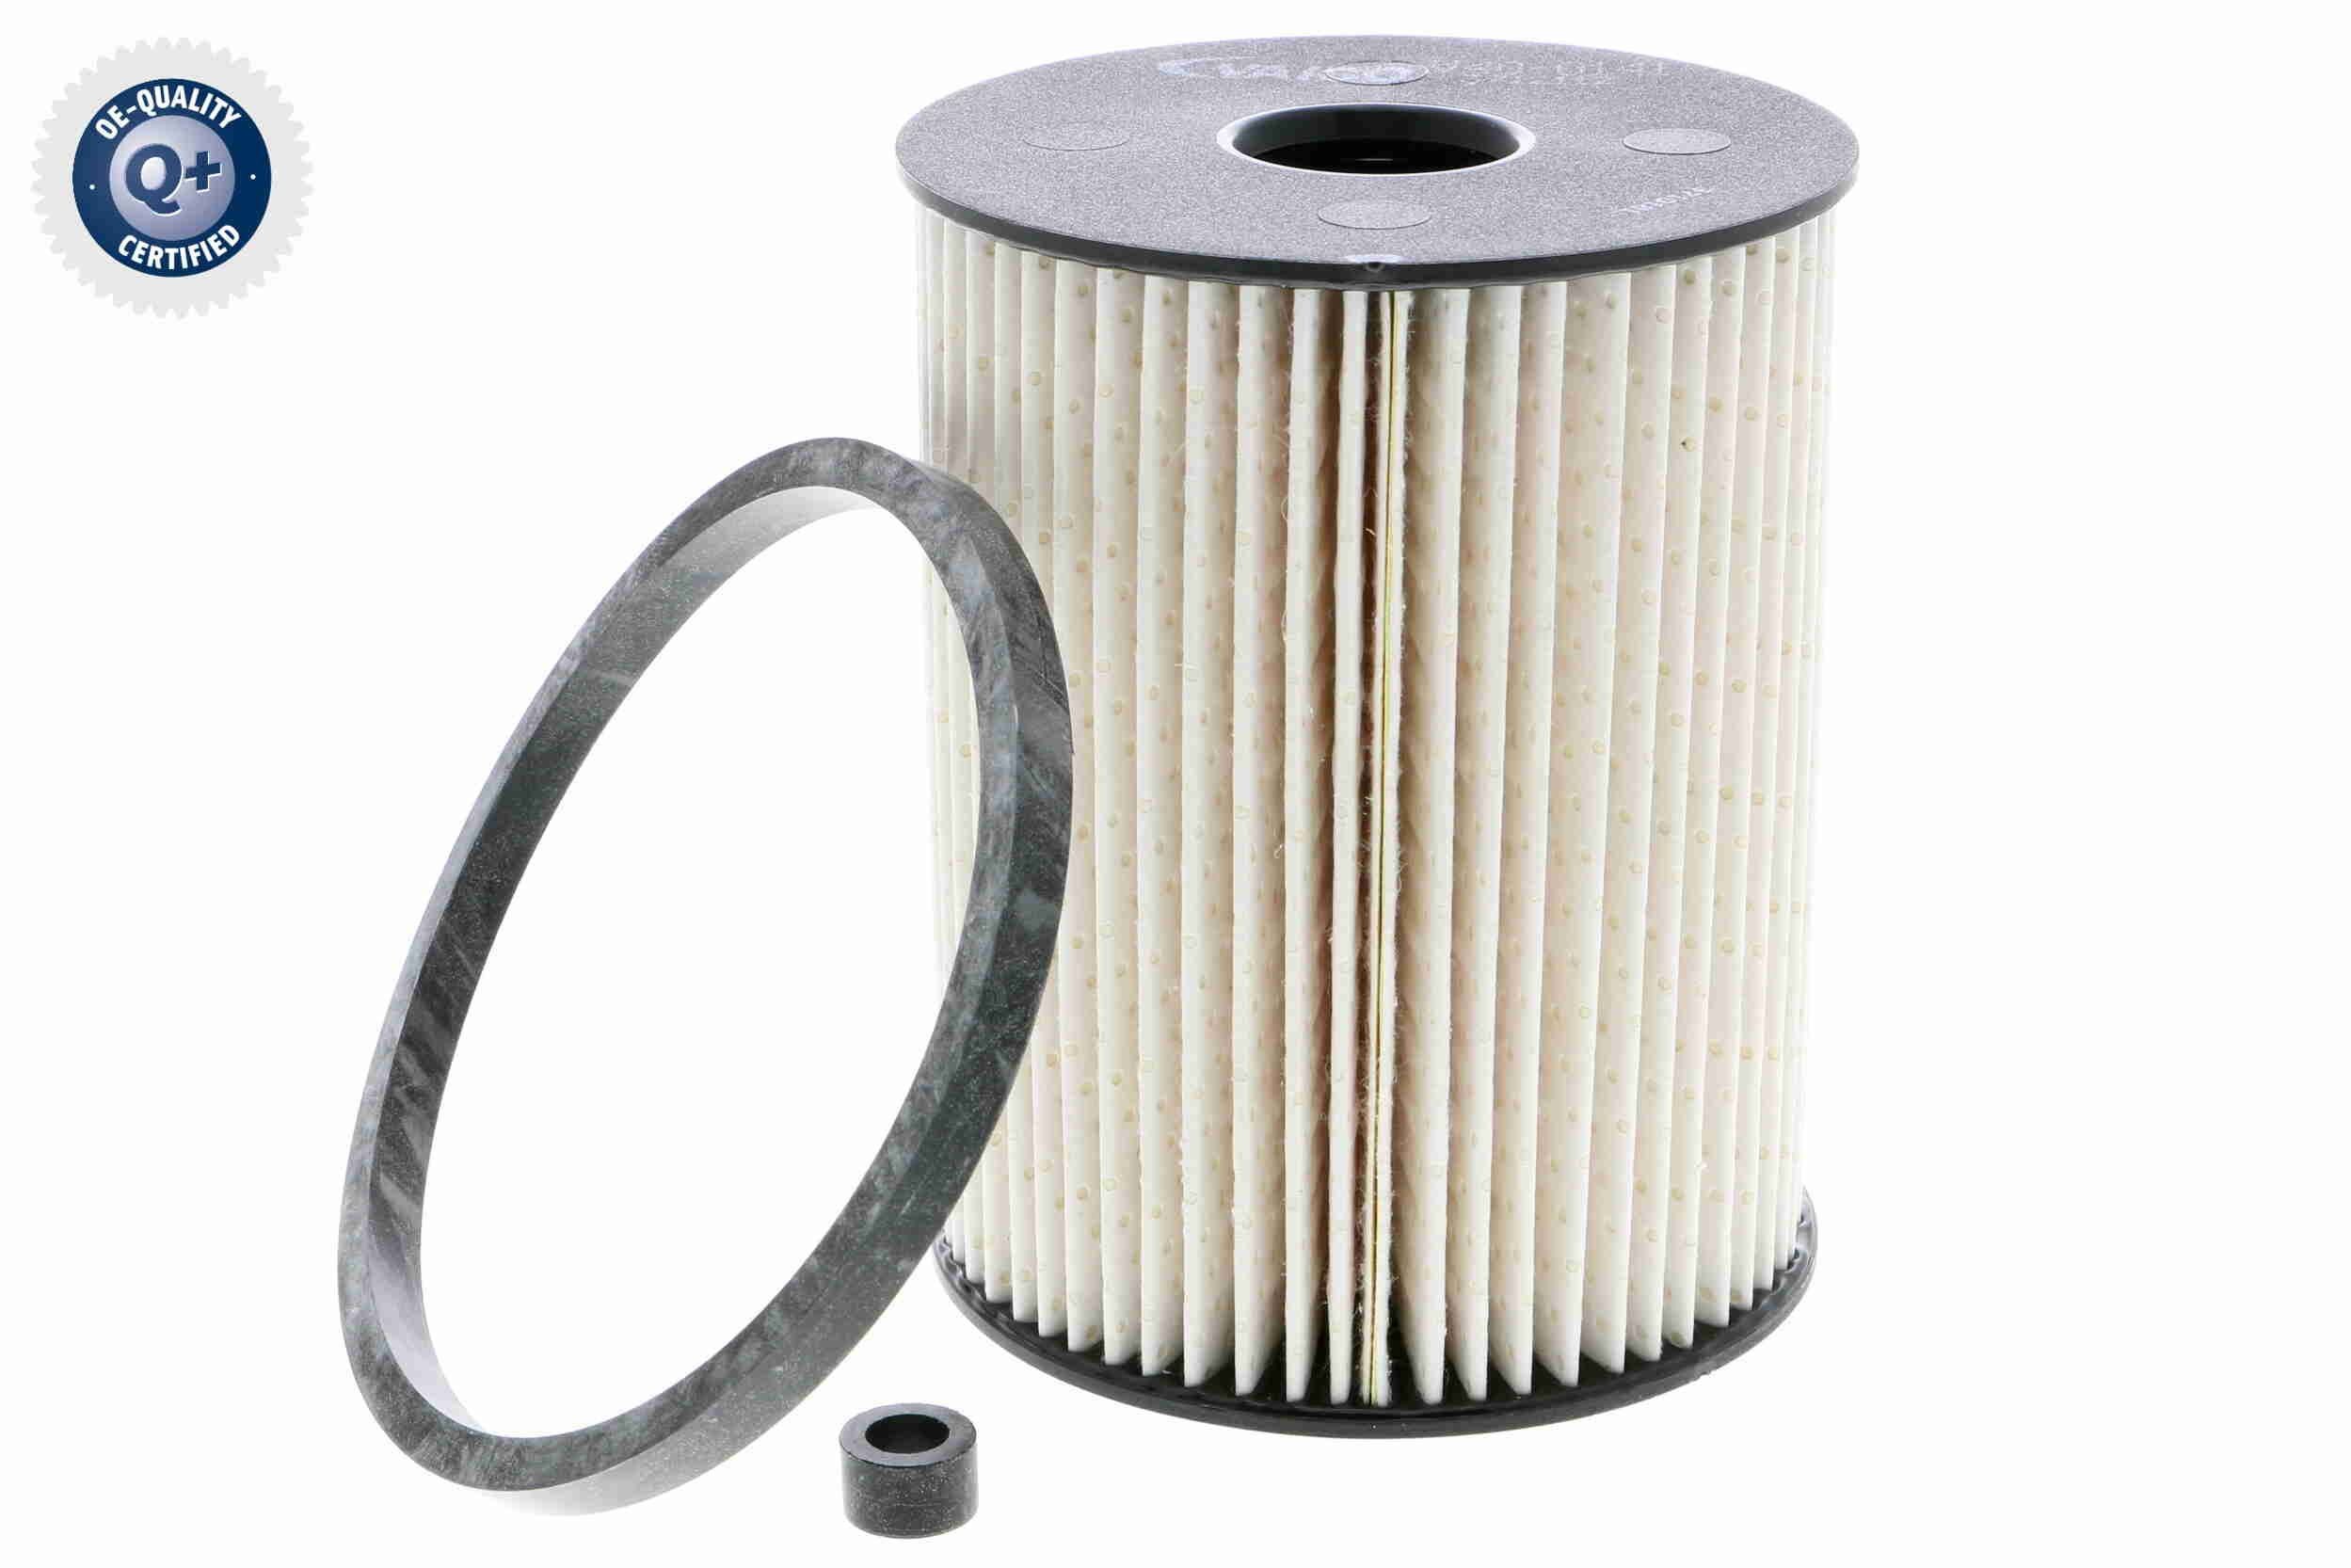 VAICO Filter Insert, Q+, original equipment manufacturer quality Height: 96mm Inline fuel filter V40-0141 buy